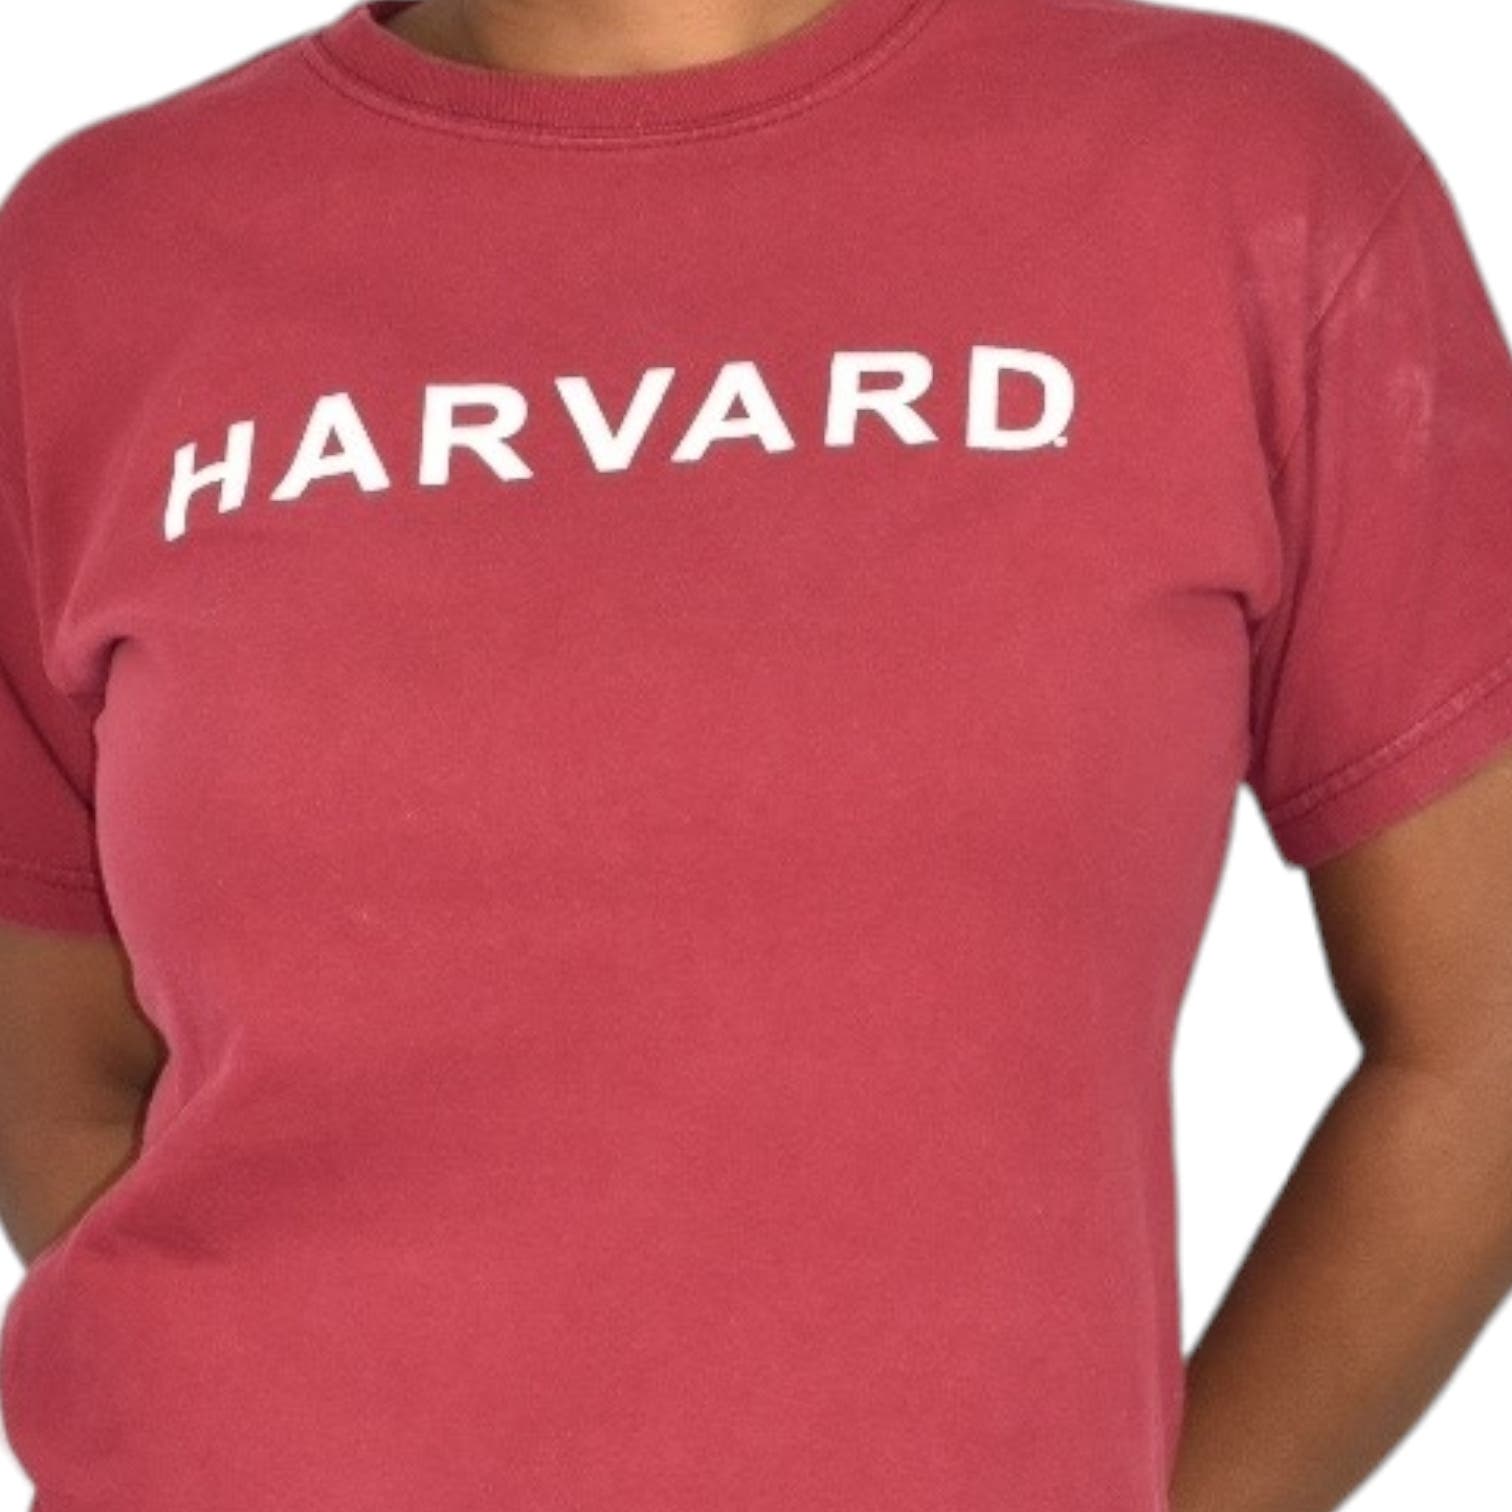 Vintage Harvard Tee Red University Collegiate College U Trau USA T Shirt Ivy League Size Medium